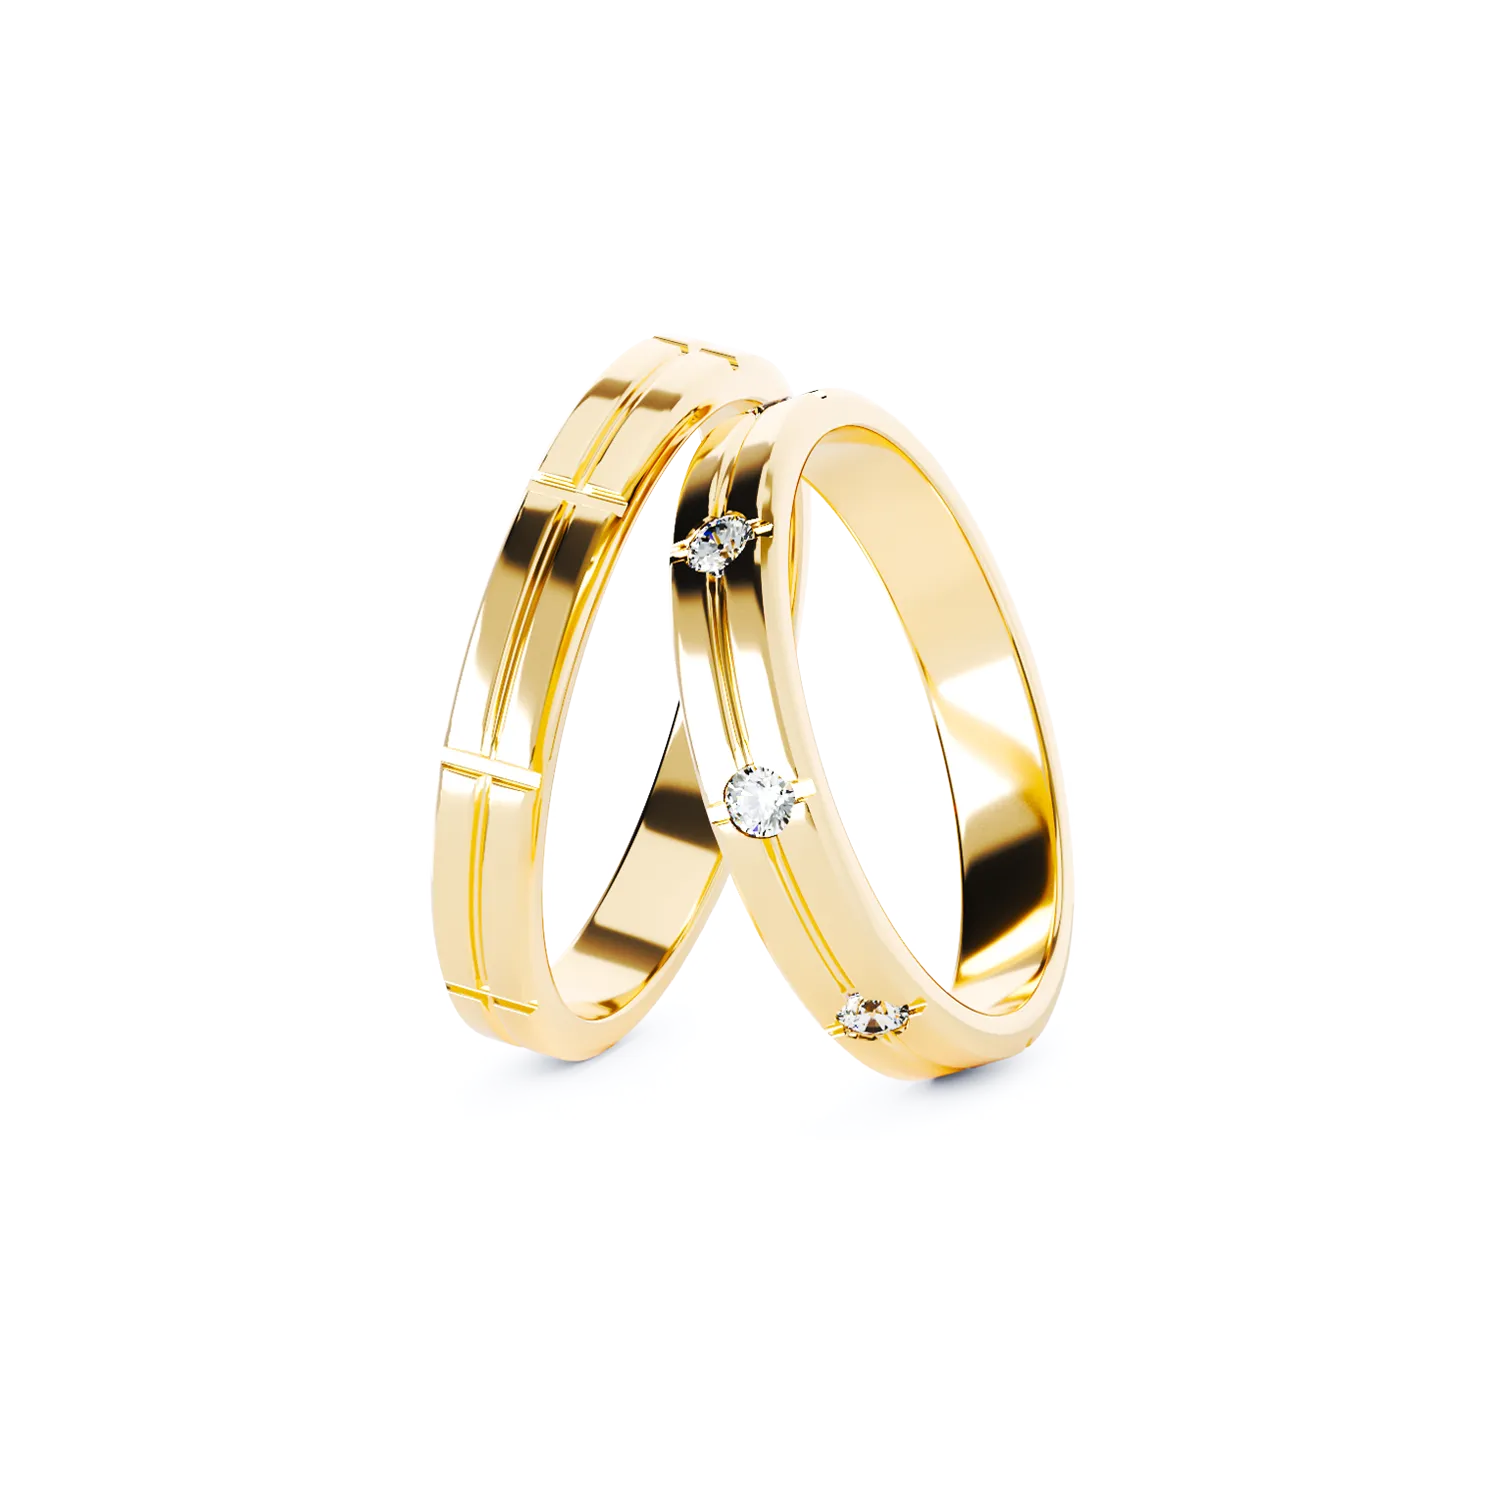 TEI-CIEL gold wedding rings